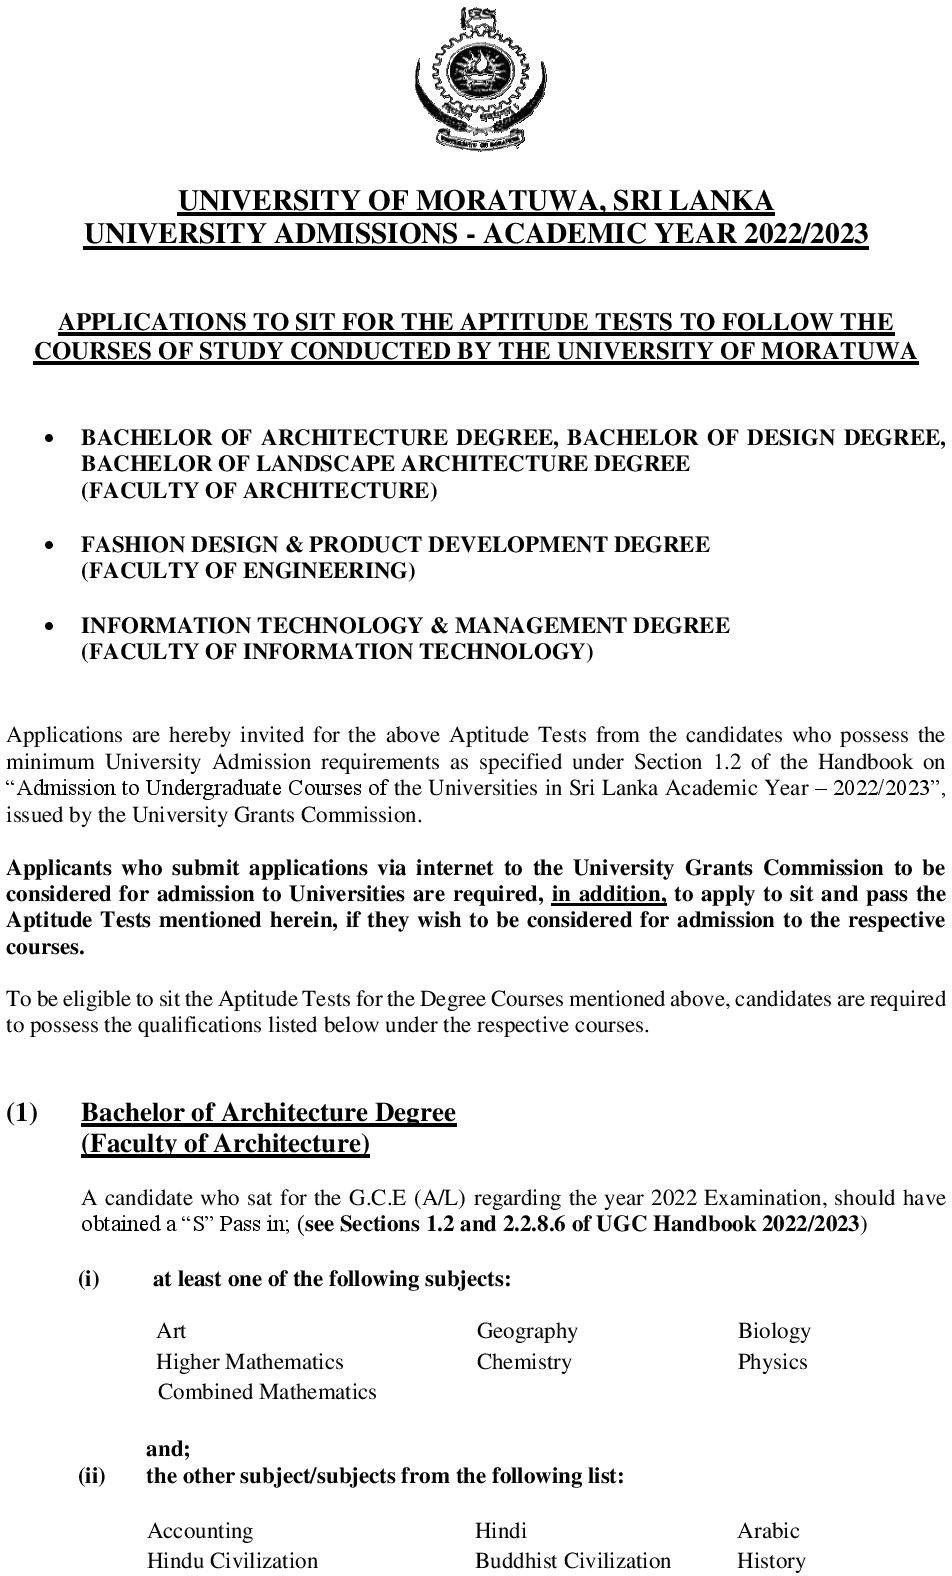 university-of-moratuwa-aptitude-test-application-2022-2023-uom-ceylon-vacancy